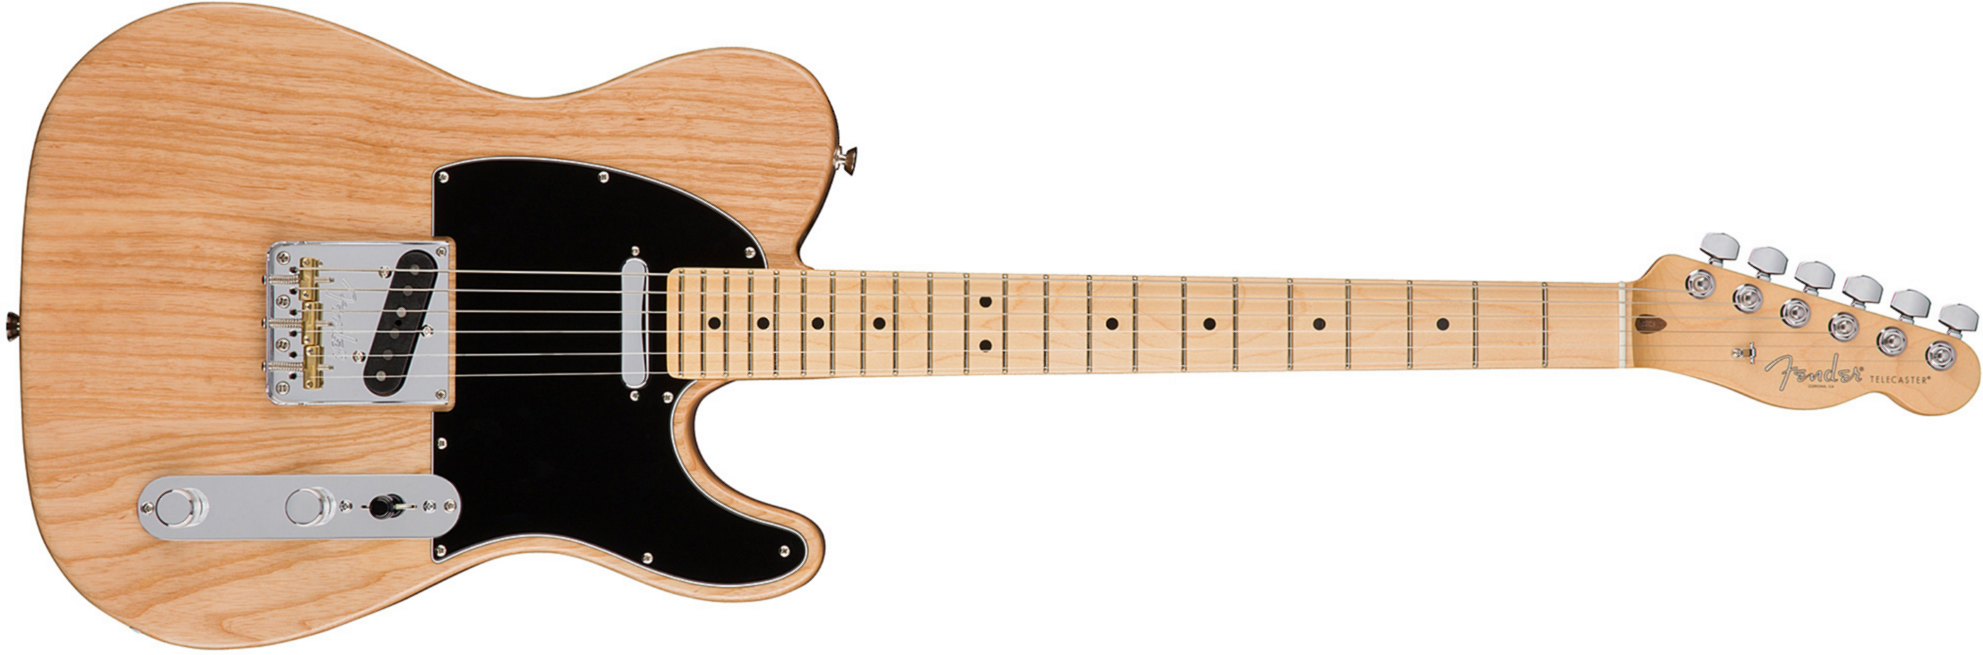 Fender Tele American Professional 2s Usa Mn - Natural - Guitarra eléctrica con forma de tel - Main picture